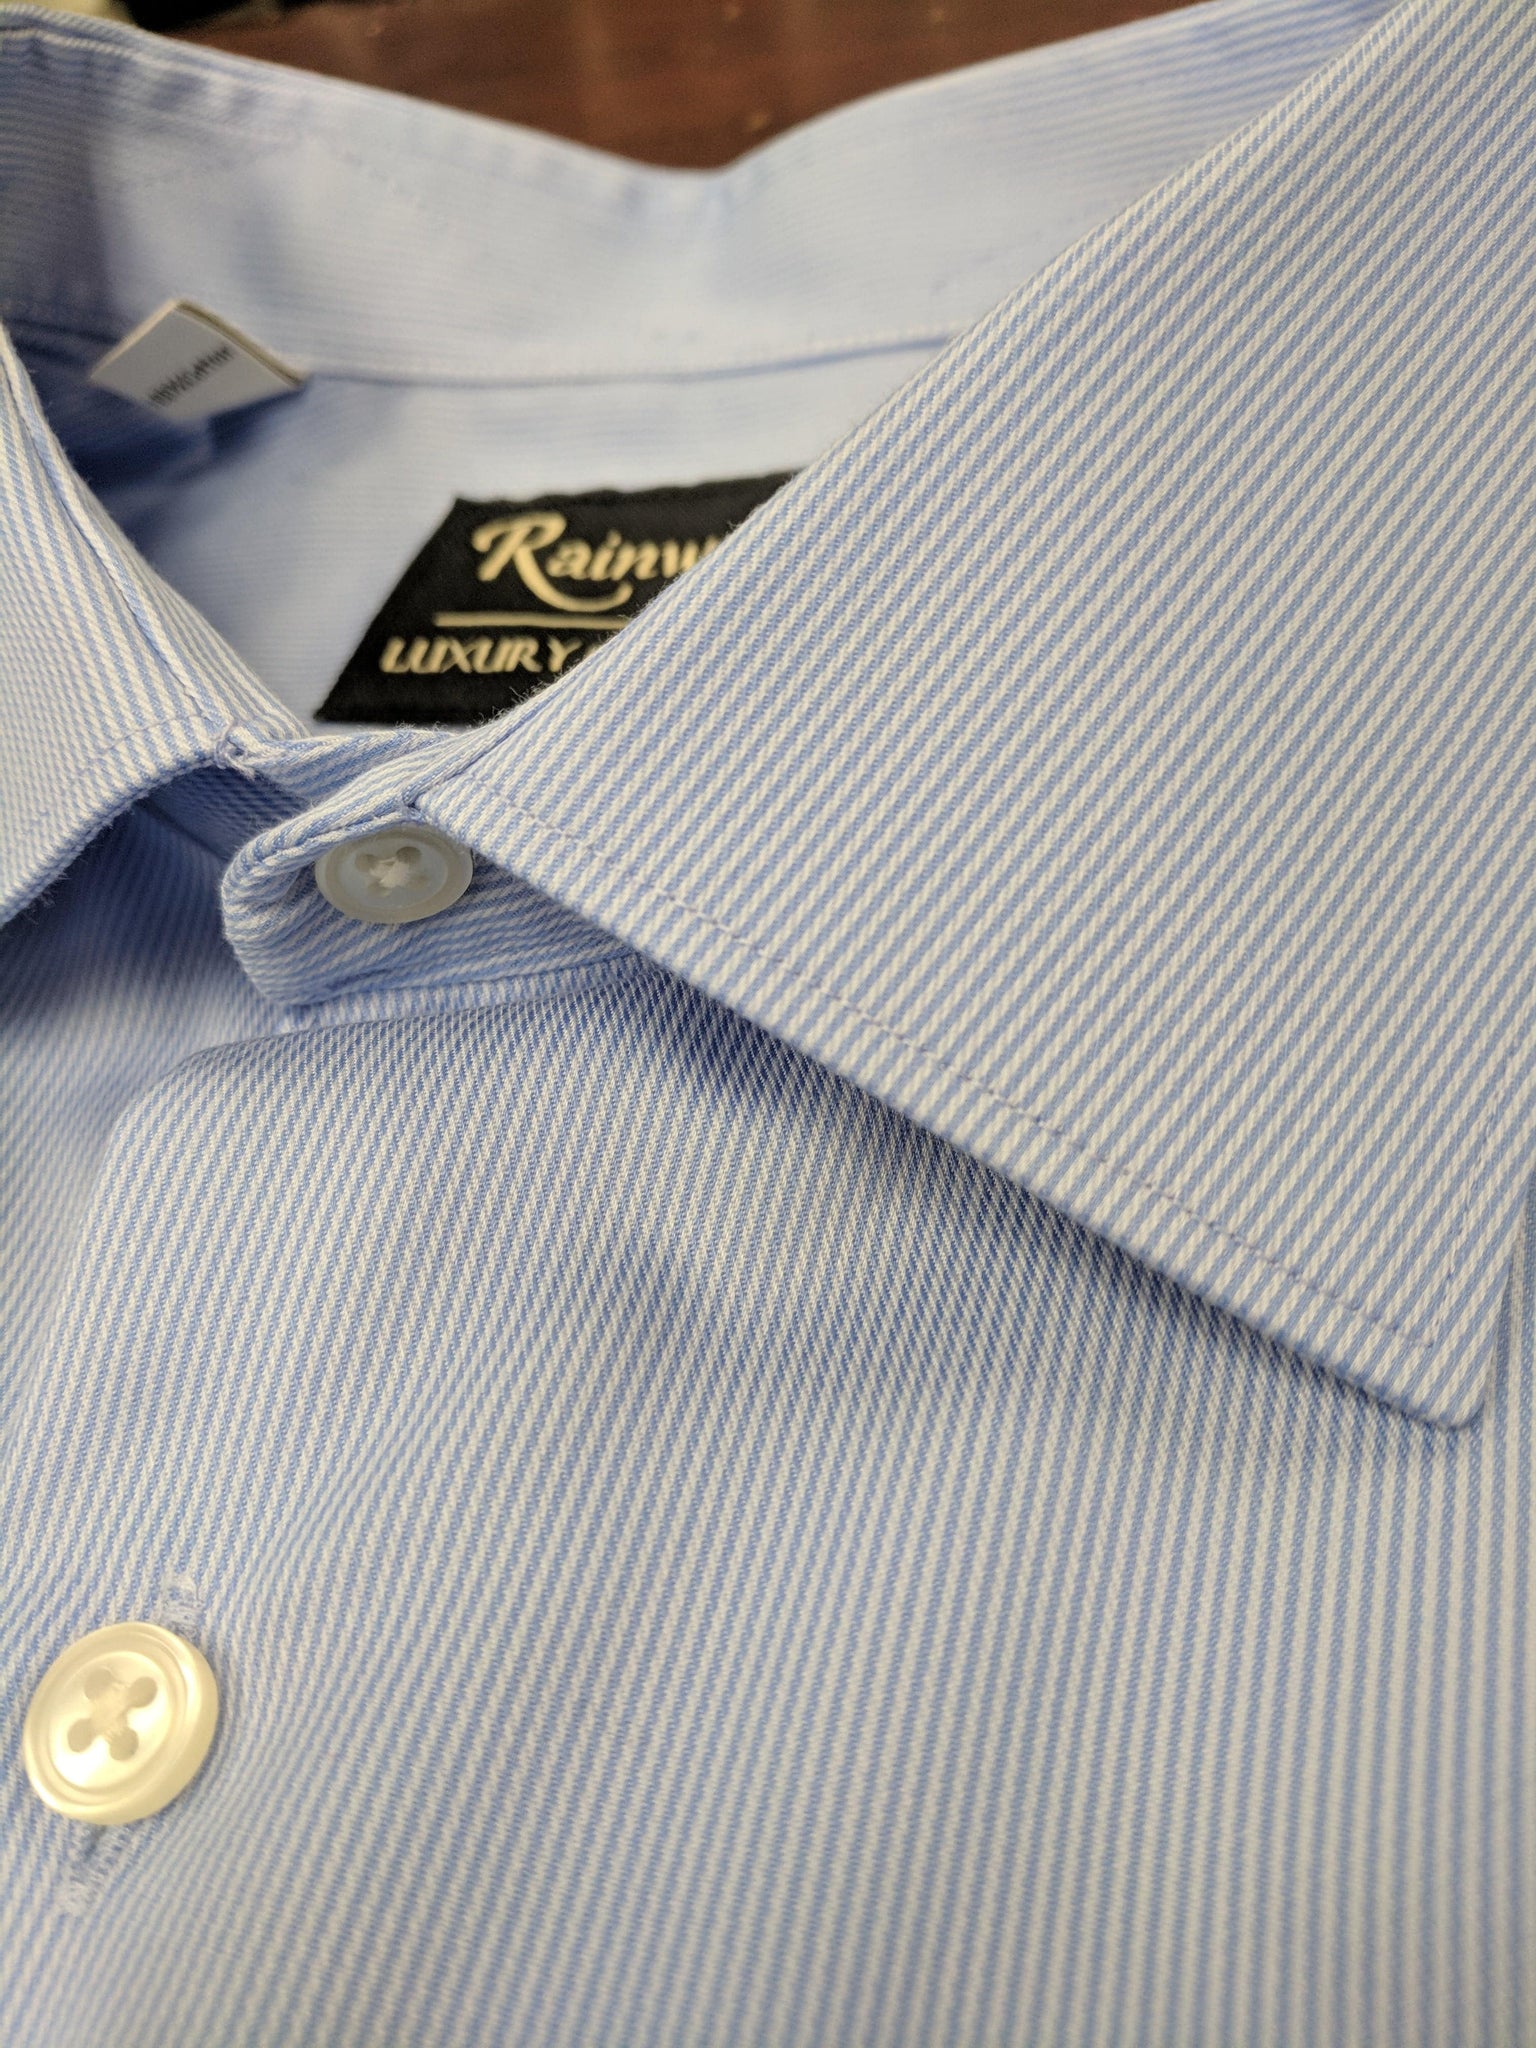 Rainwater's Non-Iron 100% Cotton Blue Twill Dress Shirt - Rainwater's Men's Clothing and Tuxedo Rental